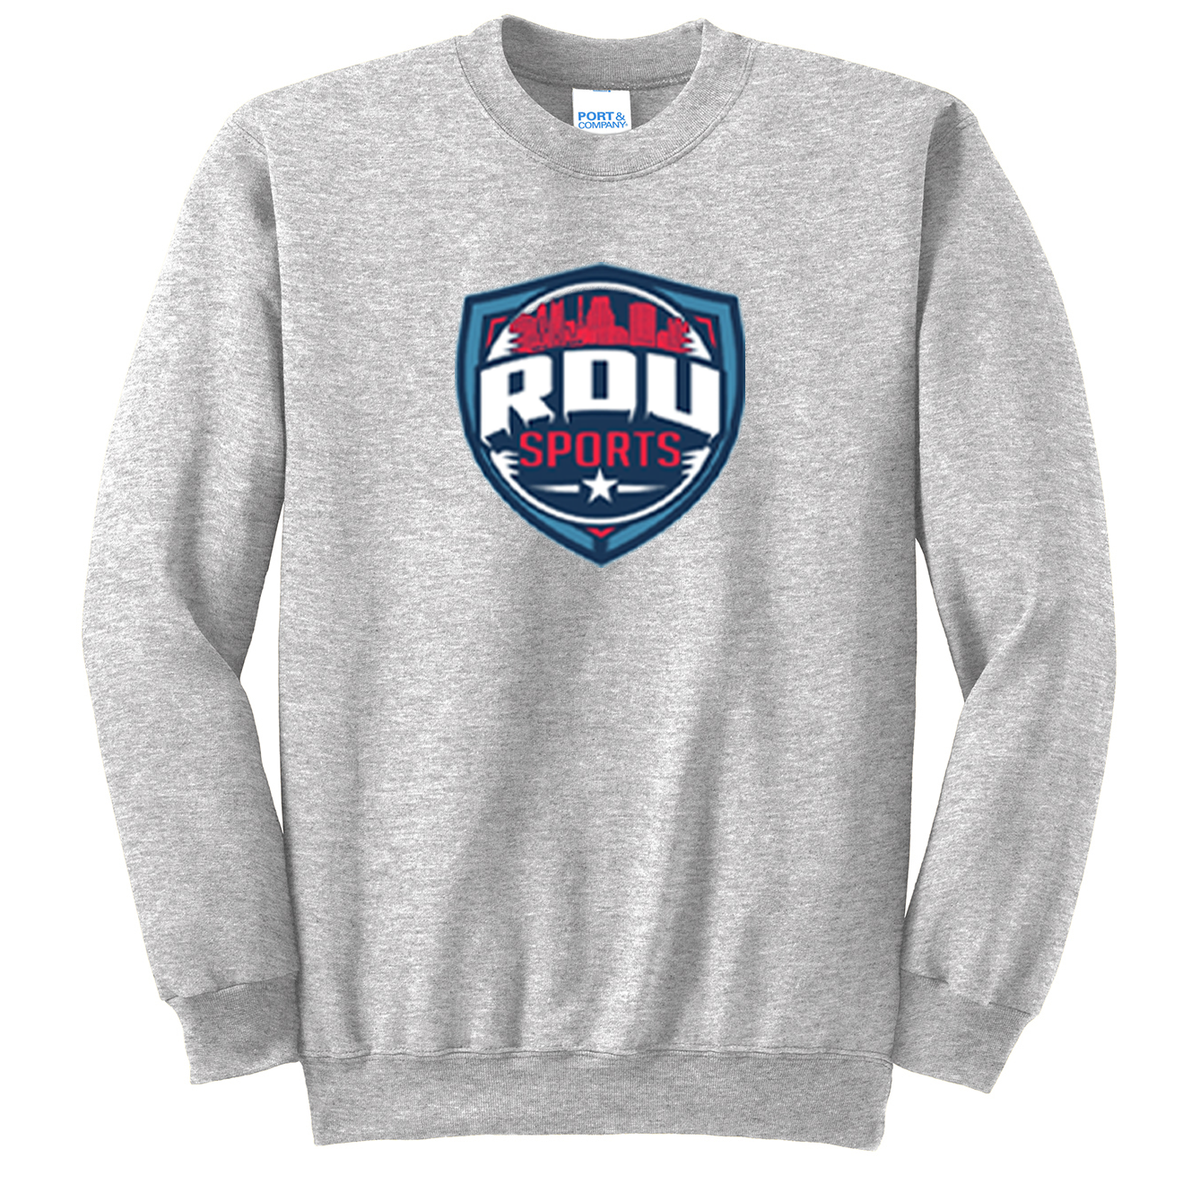 RDU Sports Crew Neck Sweater